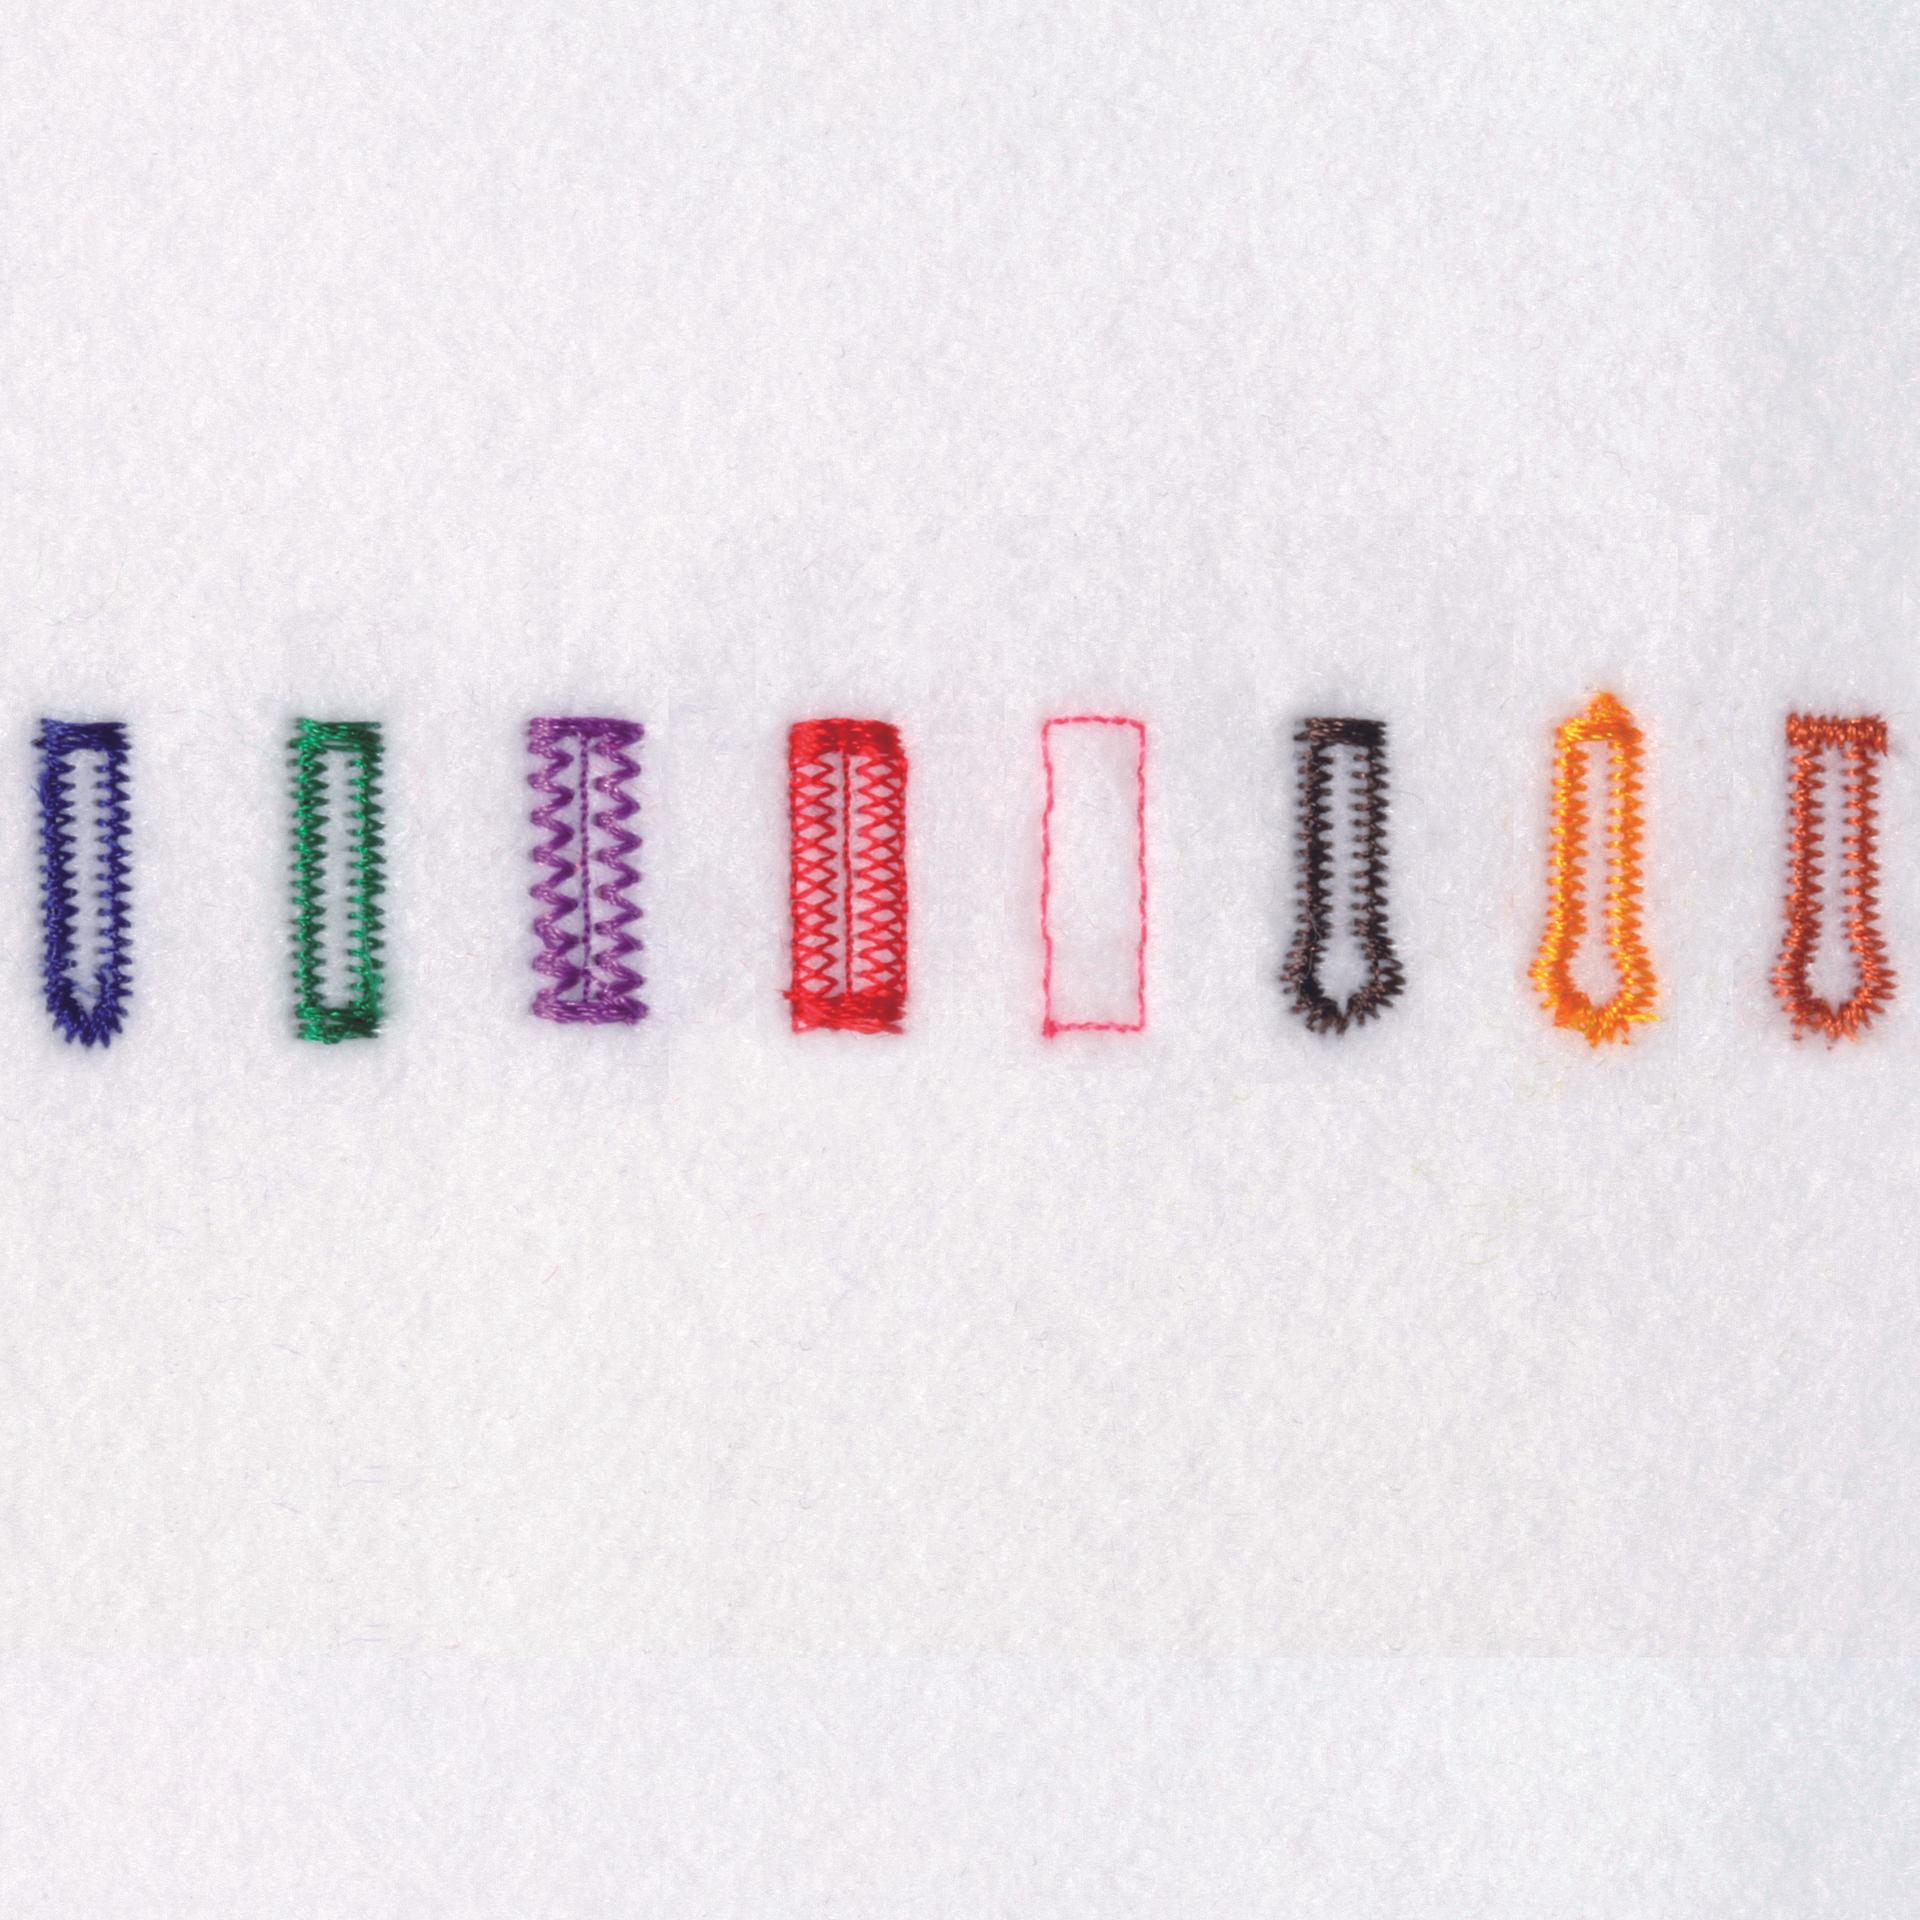 8 one-step auto-size buttonholes